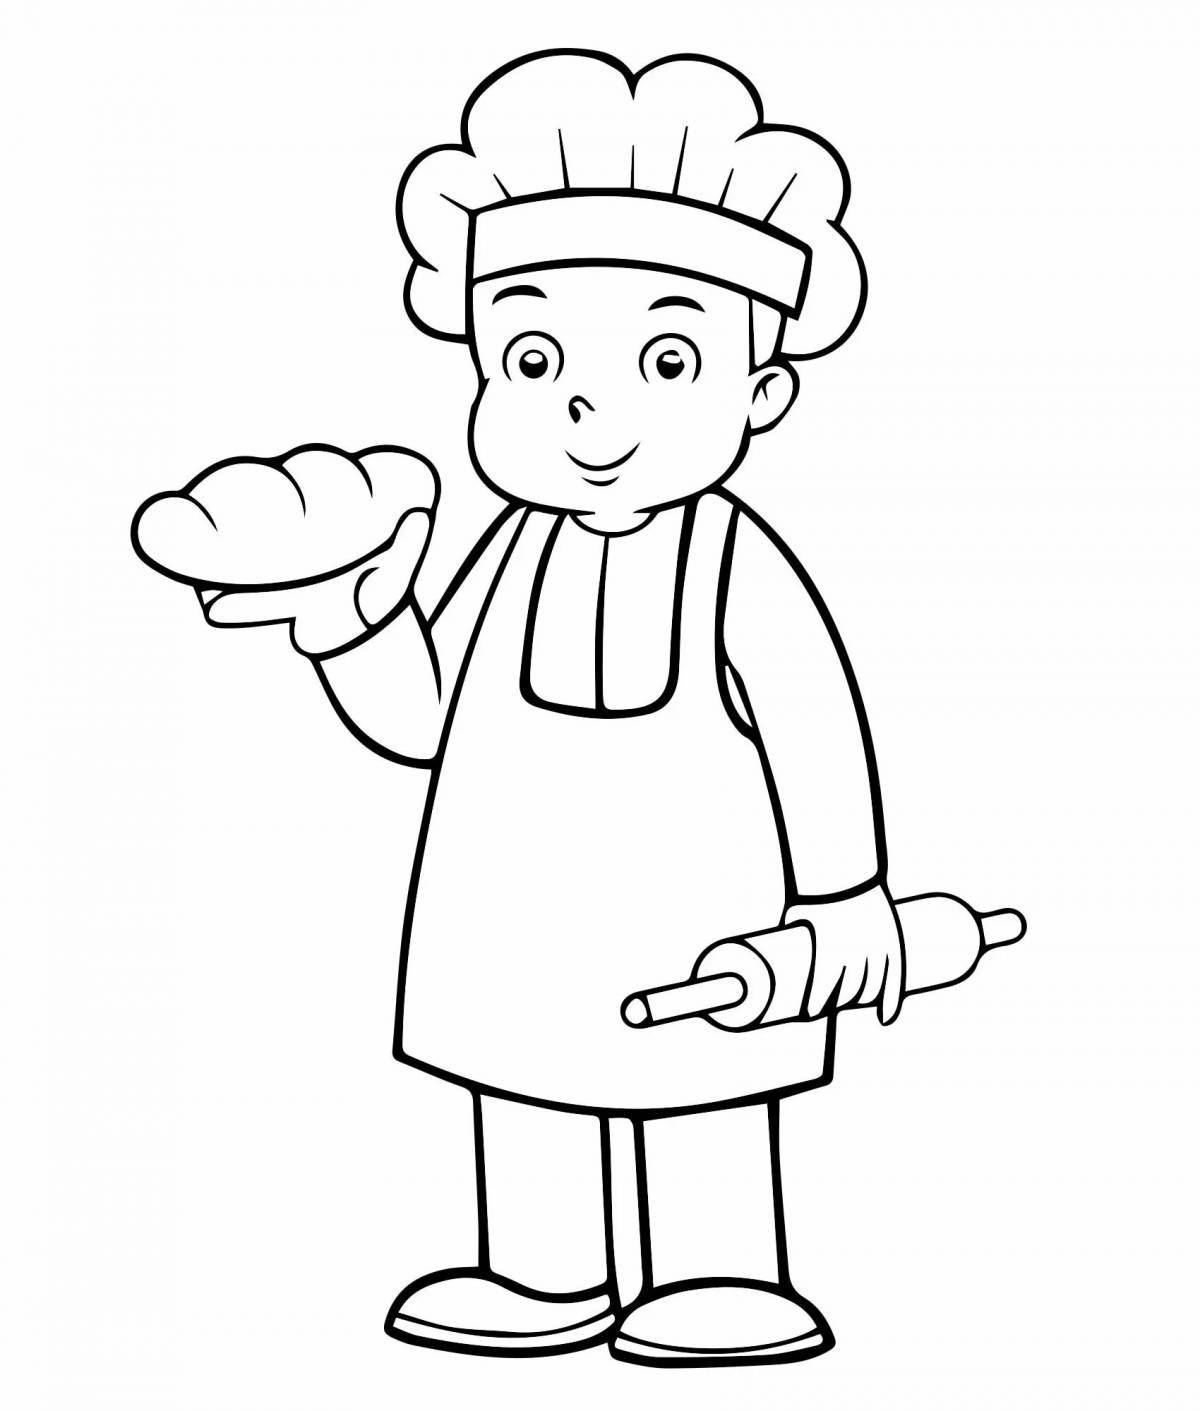 Cook profession #14